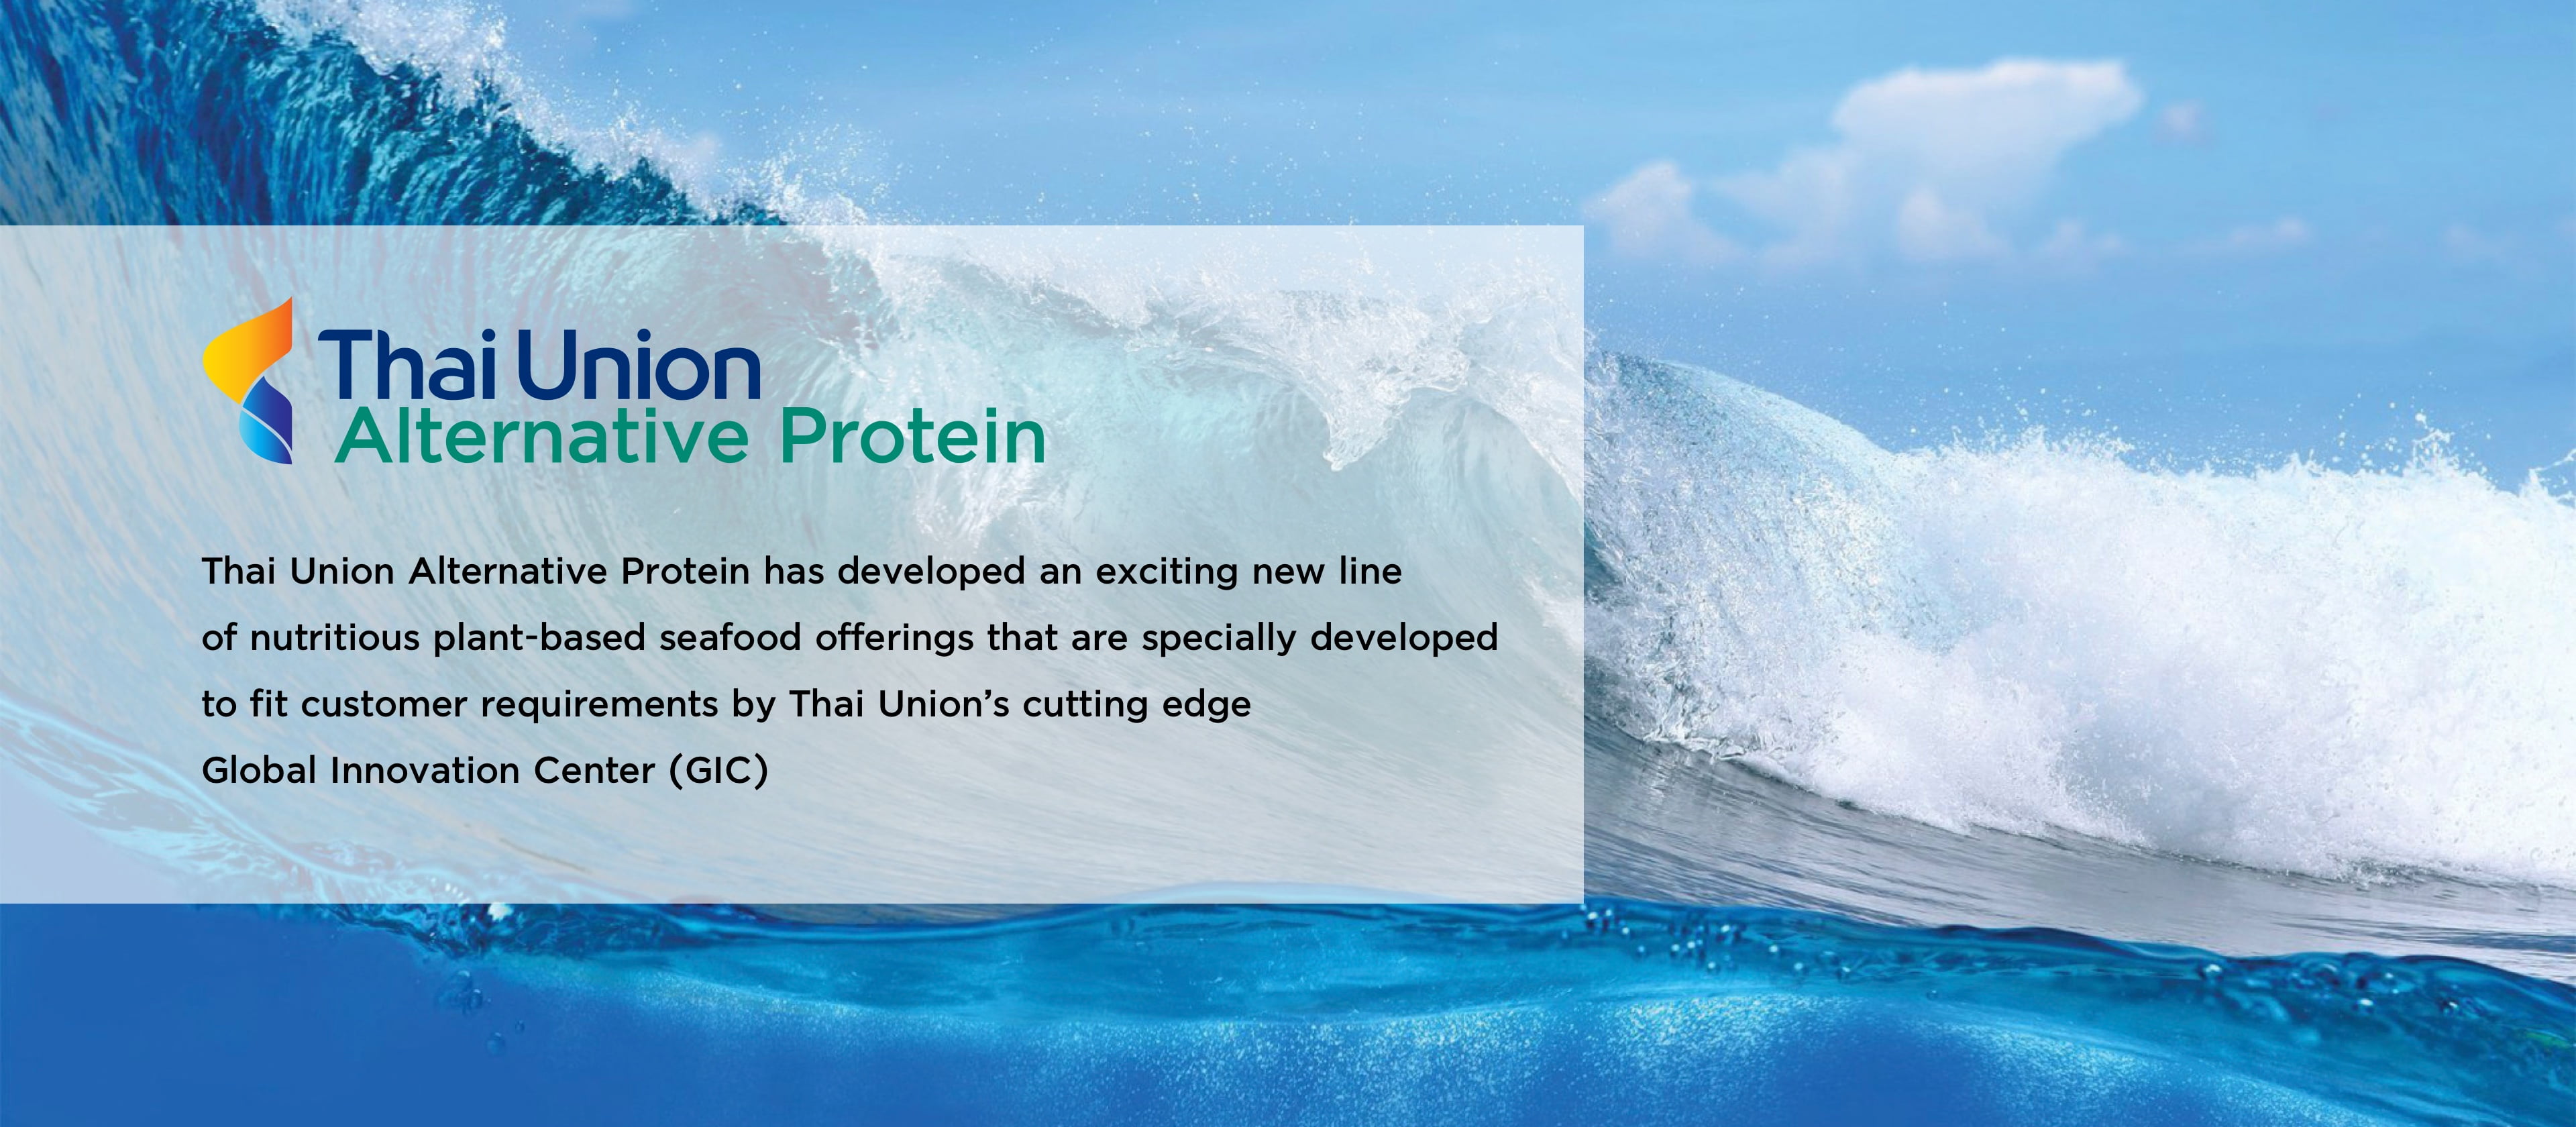 Thai Union Alternative Protein